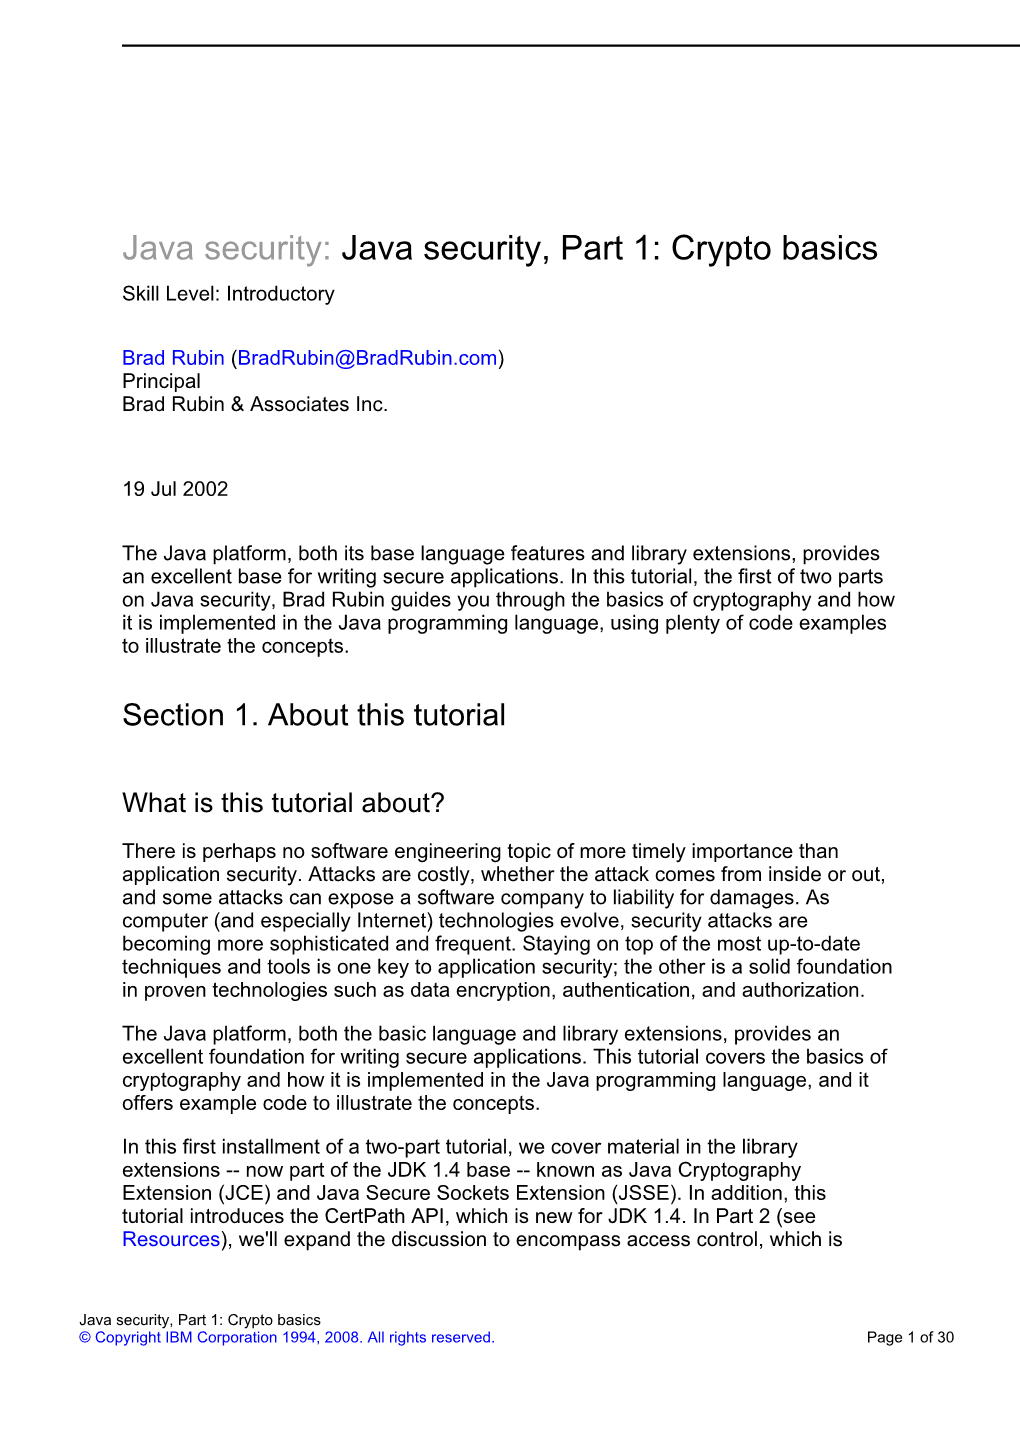 Java Security: Java Security, Part 1: Crypto Basics Skill Level: Introductory